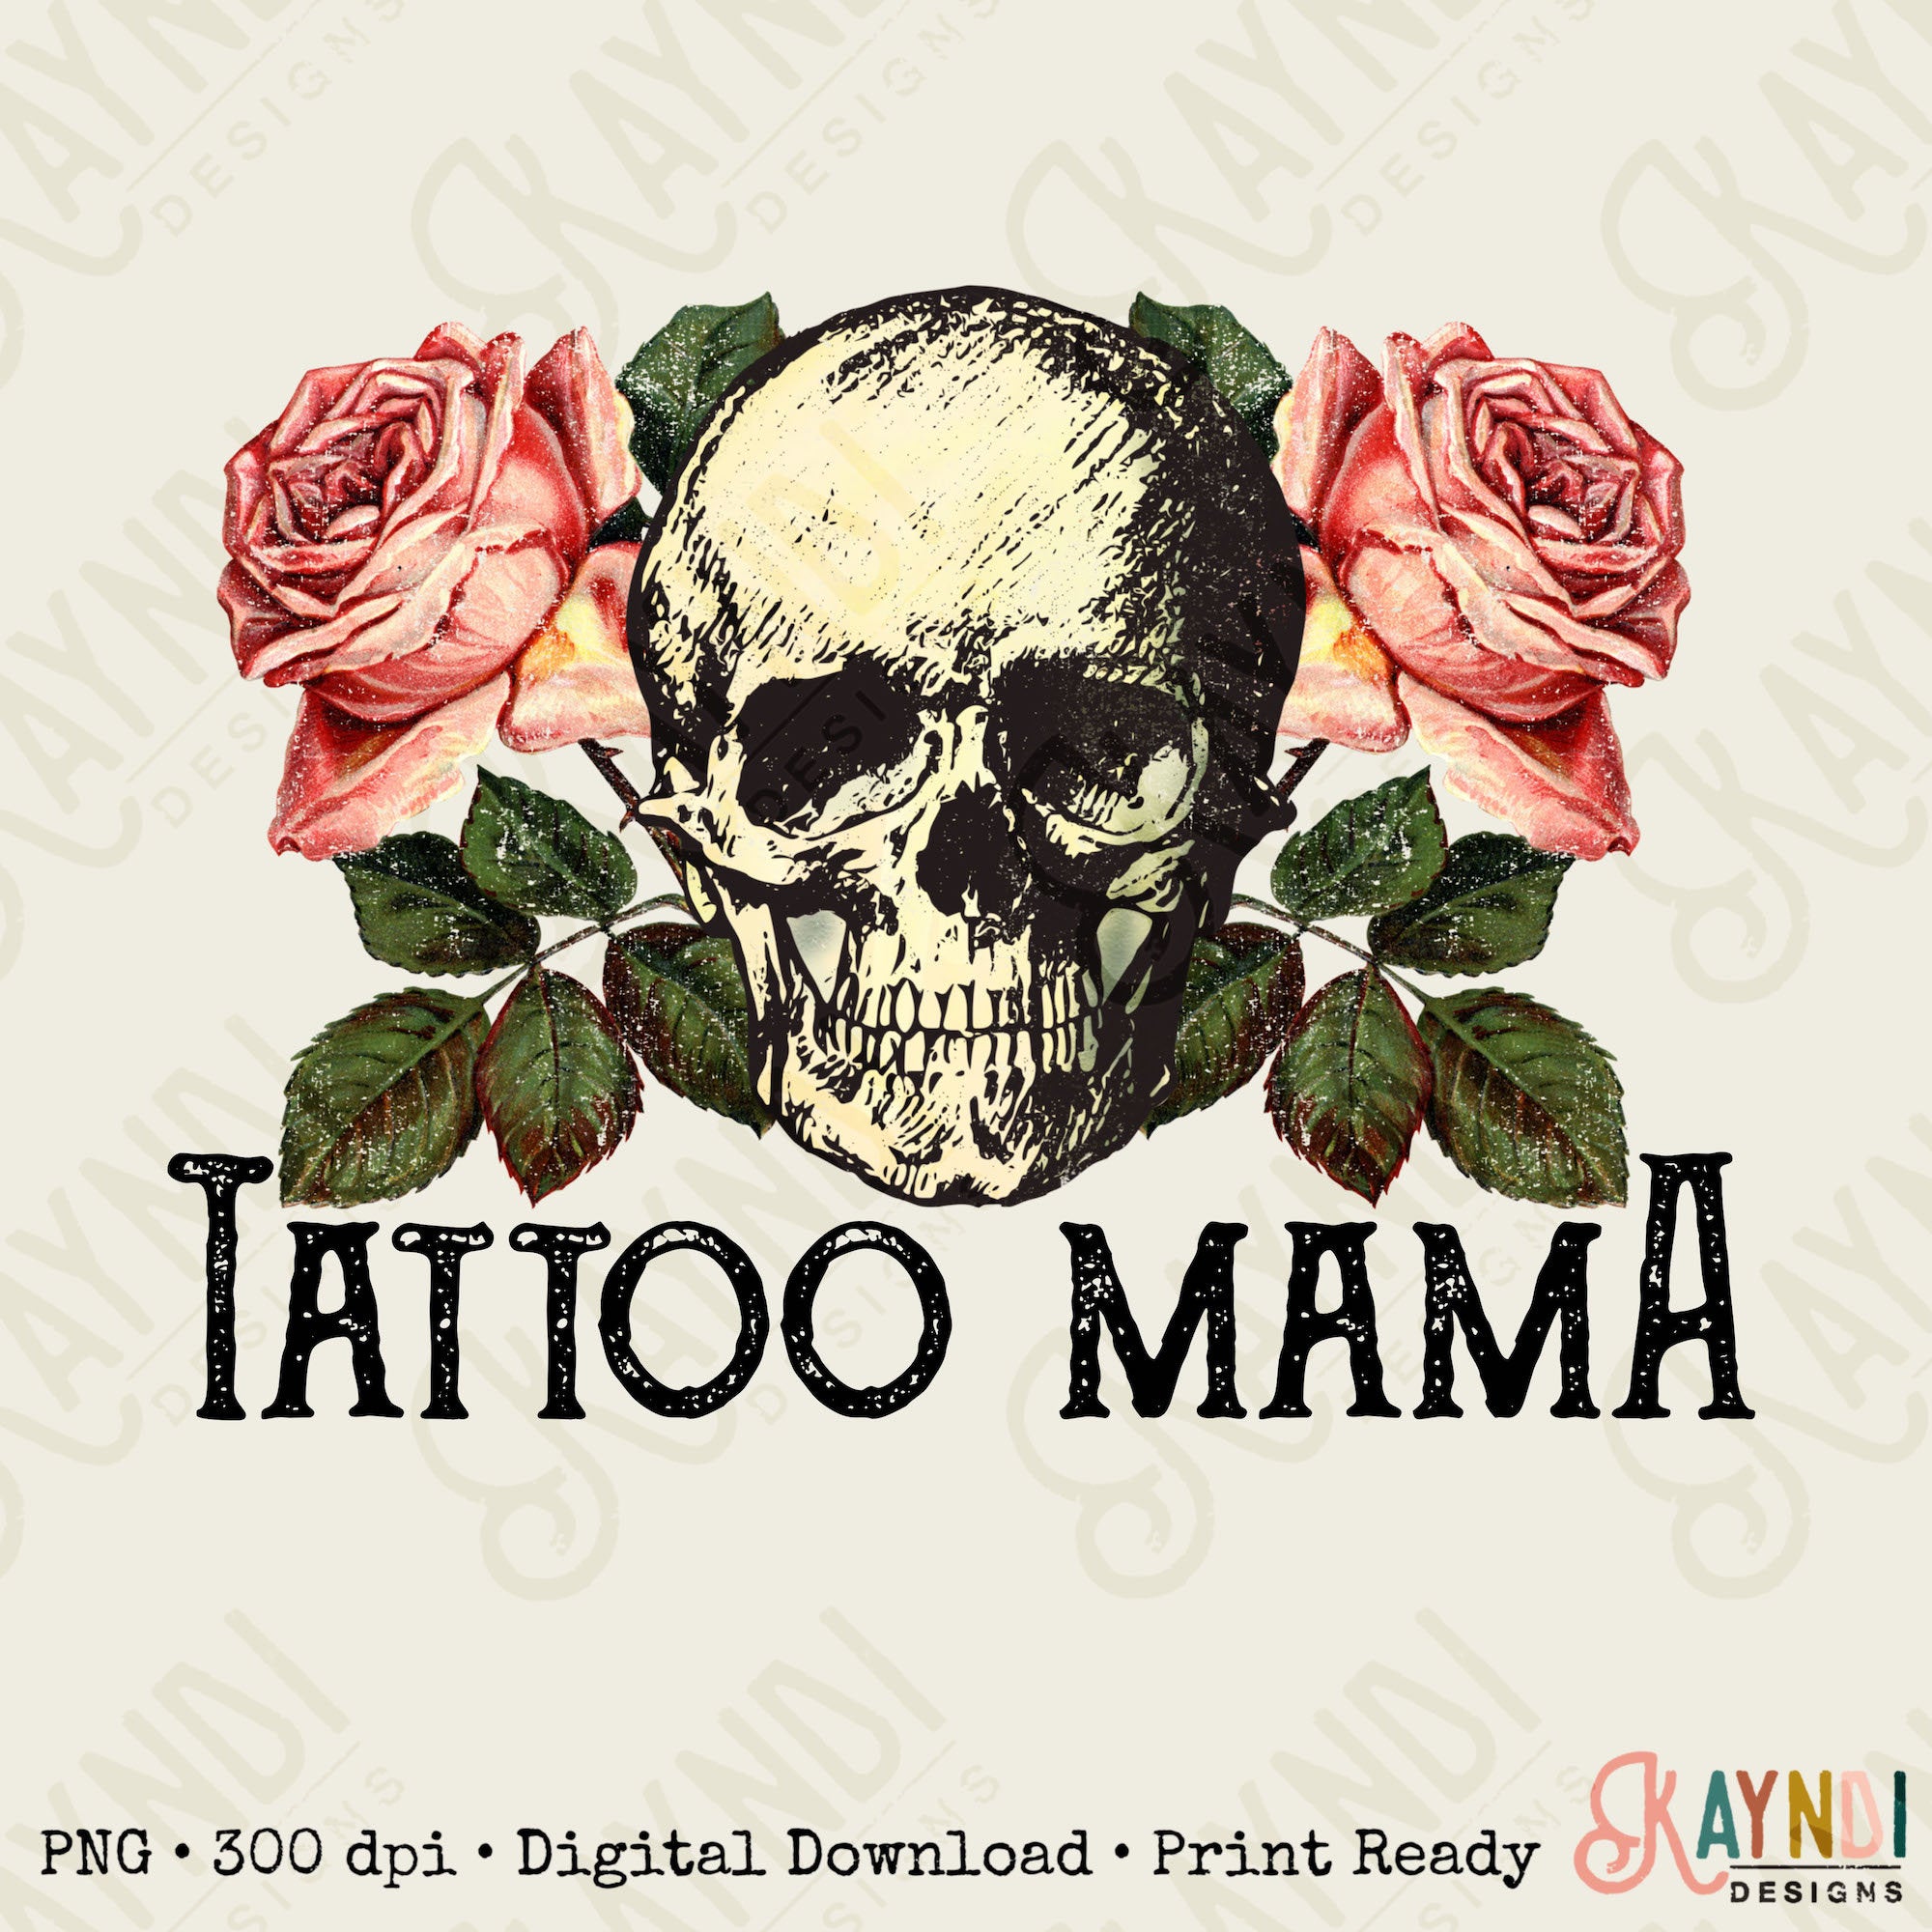 Tattoo Mama Sublimation Design PNG Digital Download Printable Skull Vintage Roses Flowers Floral Rocker Edgy Grunge Distressed